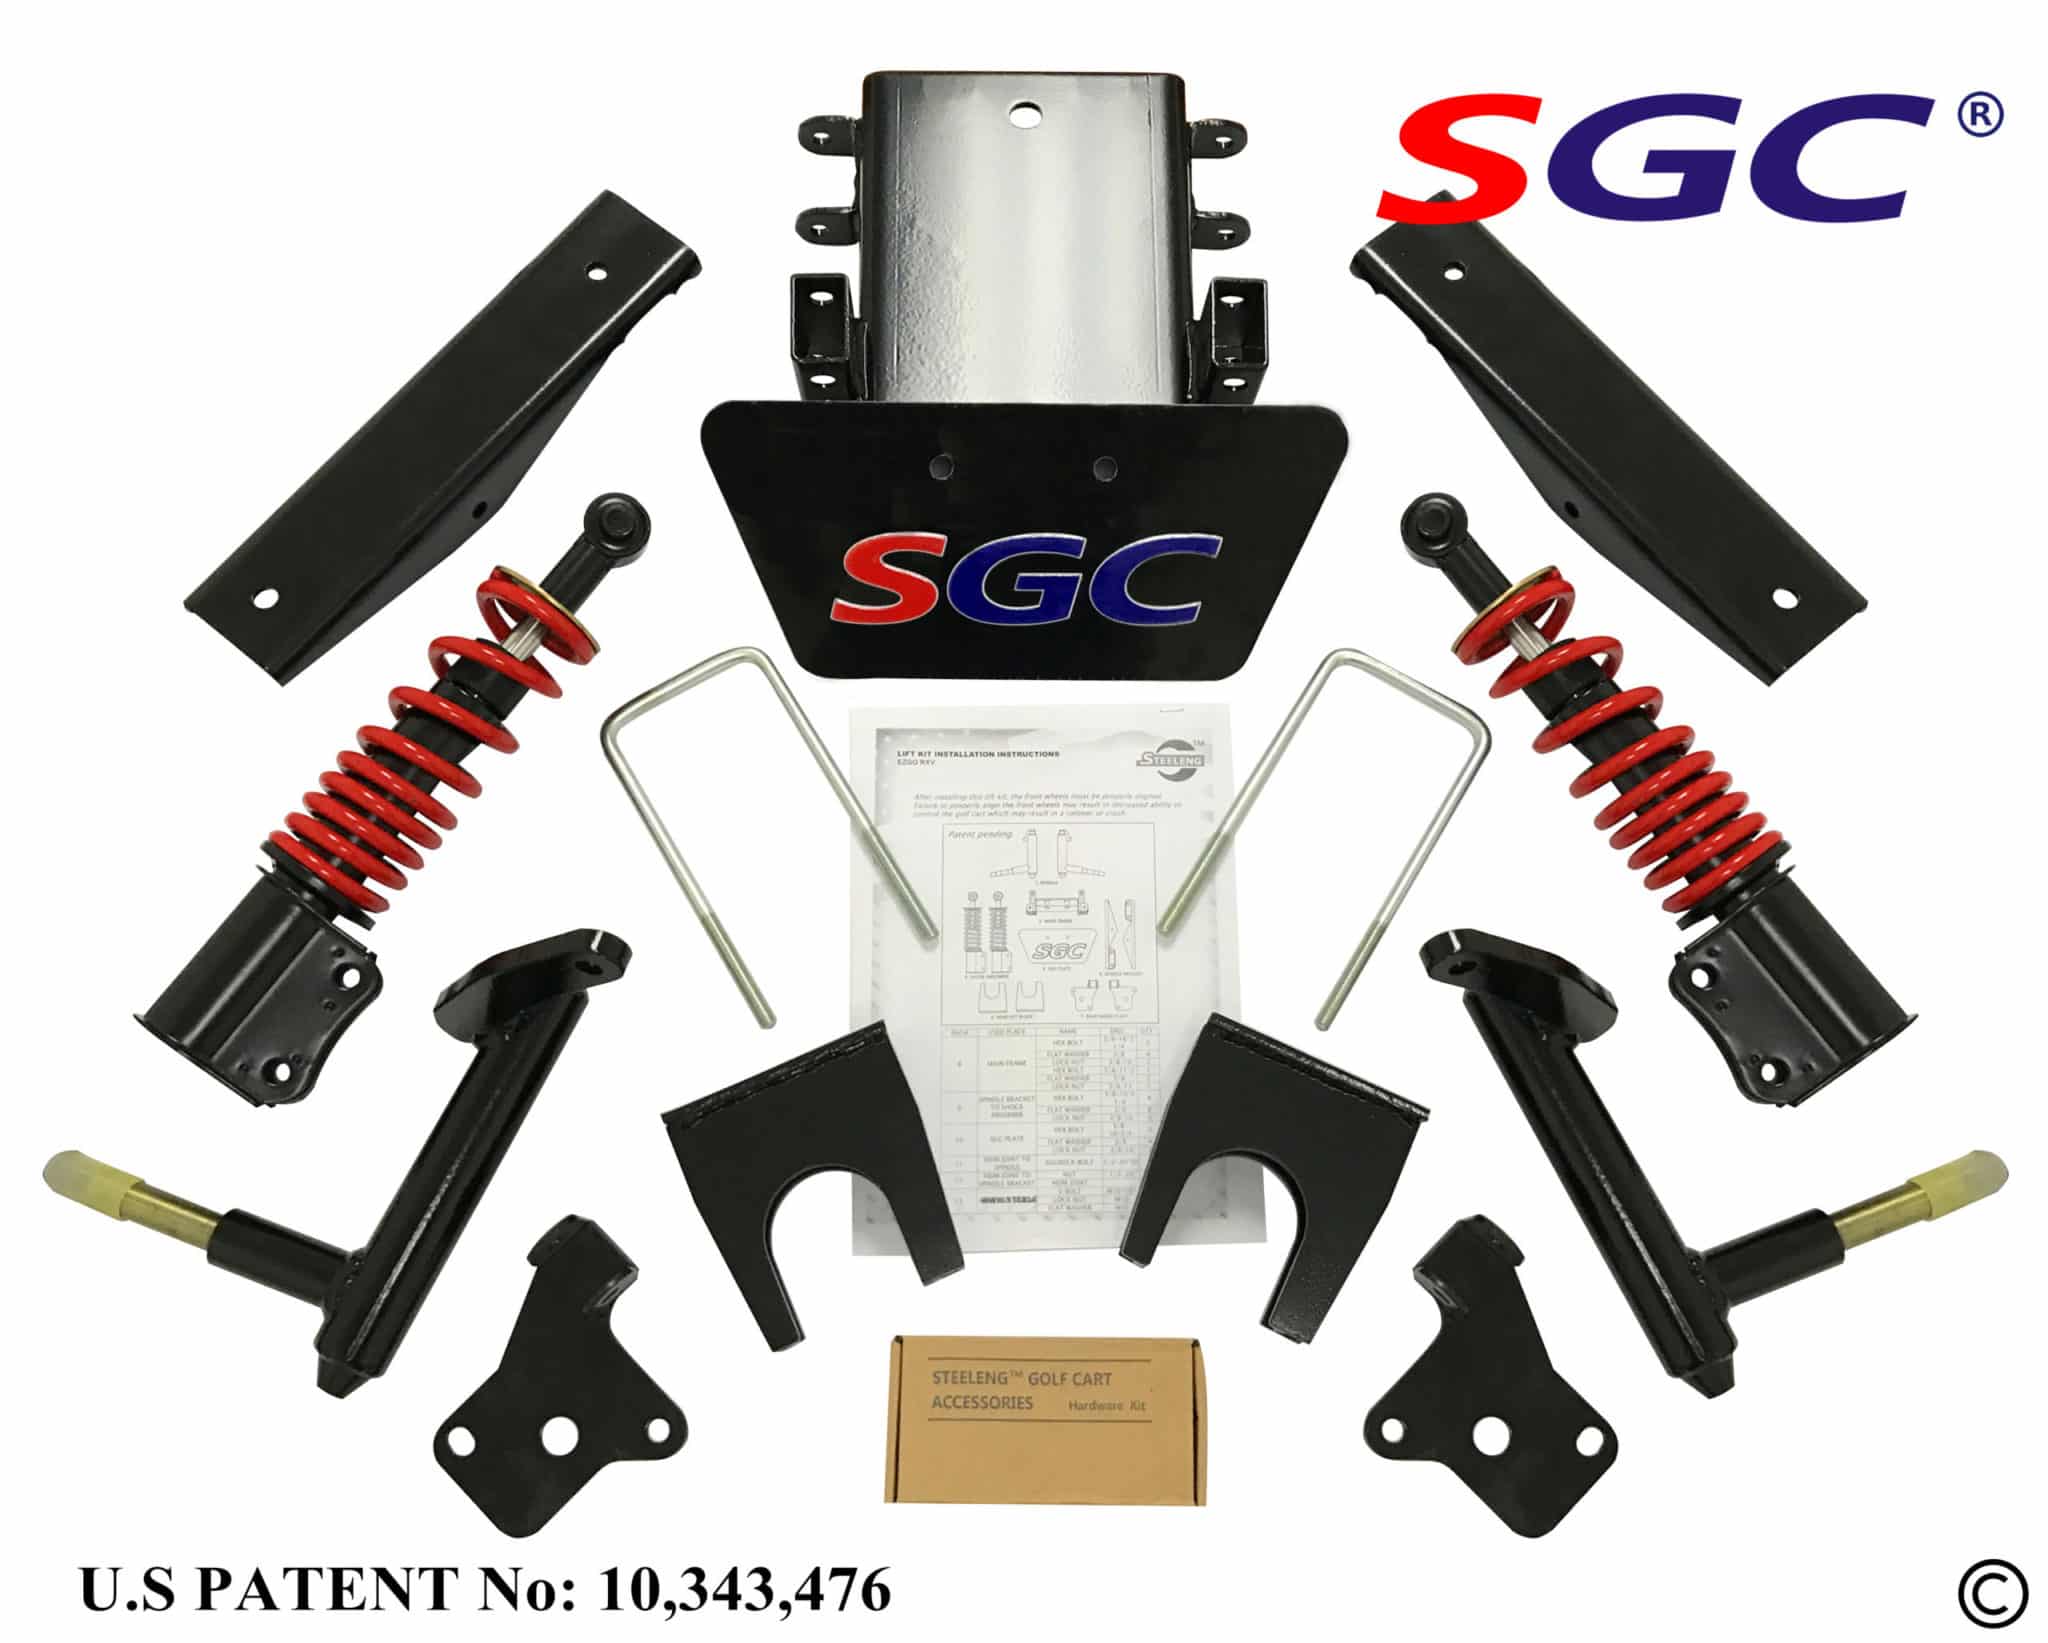 SGC 6" Heavy Duty All Terrain Suspension Lift Kit For EZGO RXV 2008-2013 Golf Cart